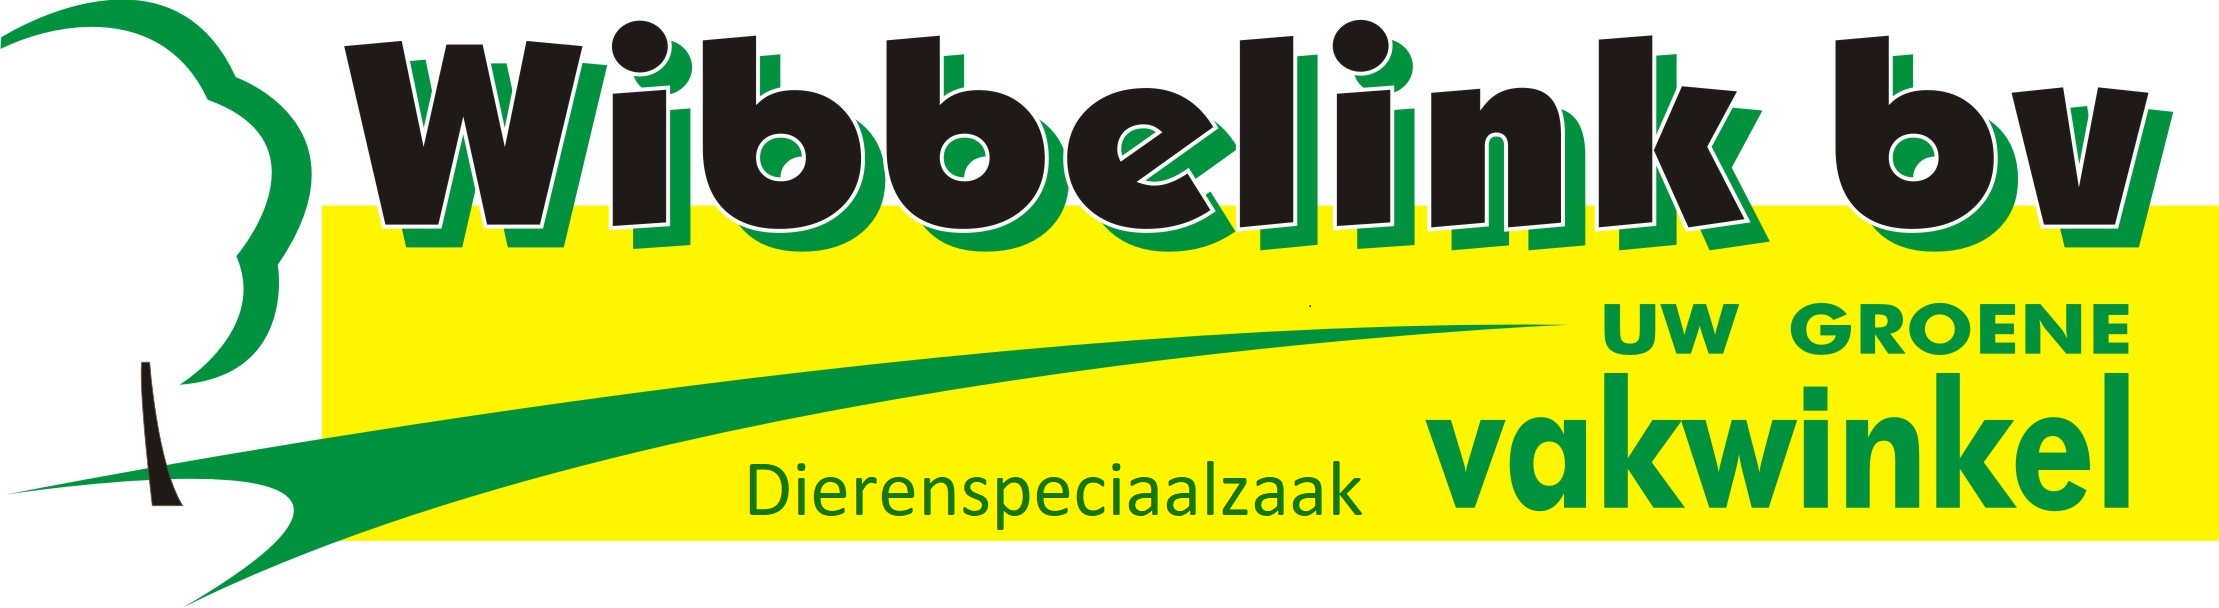 Wibbelink - Uw Groene Vakwinkel